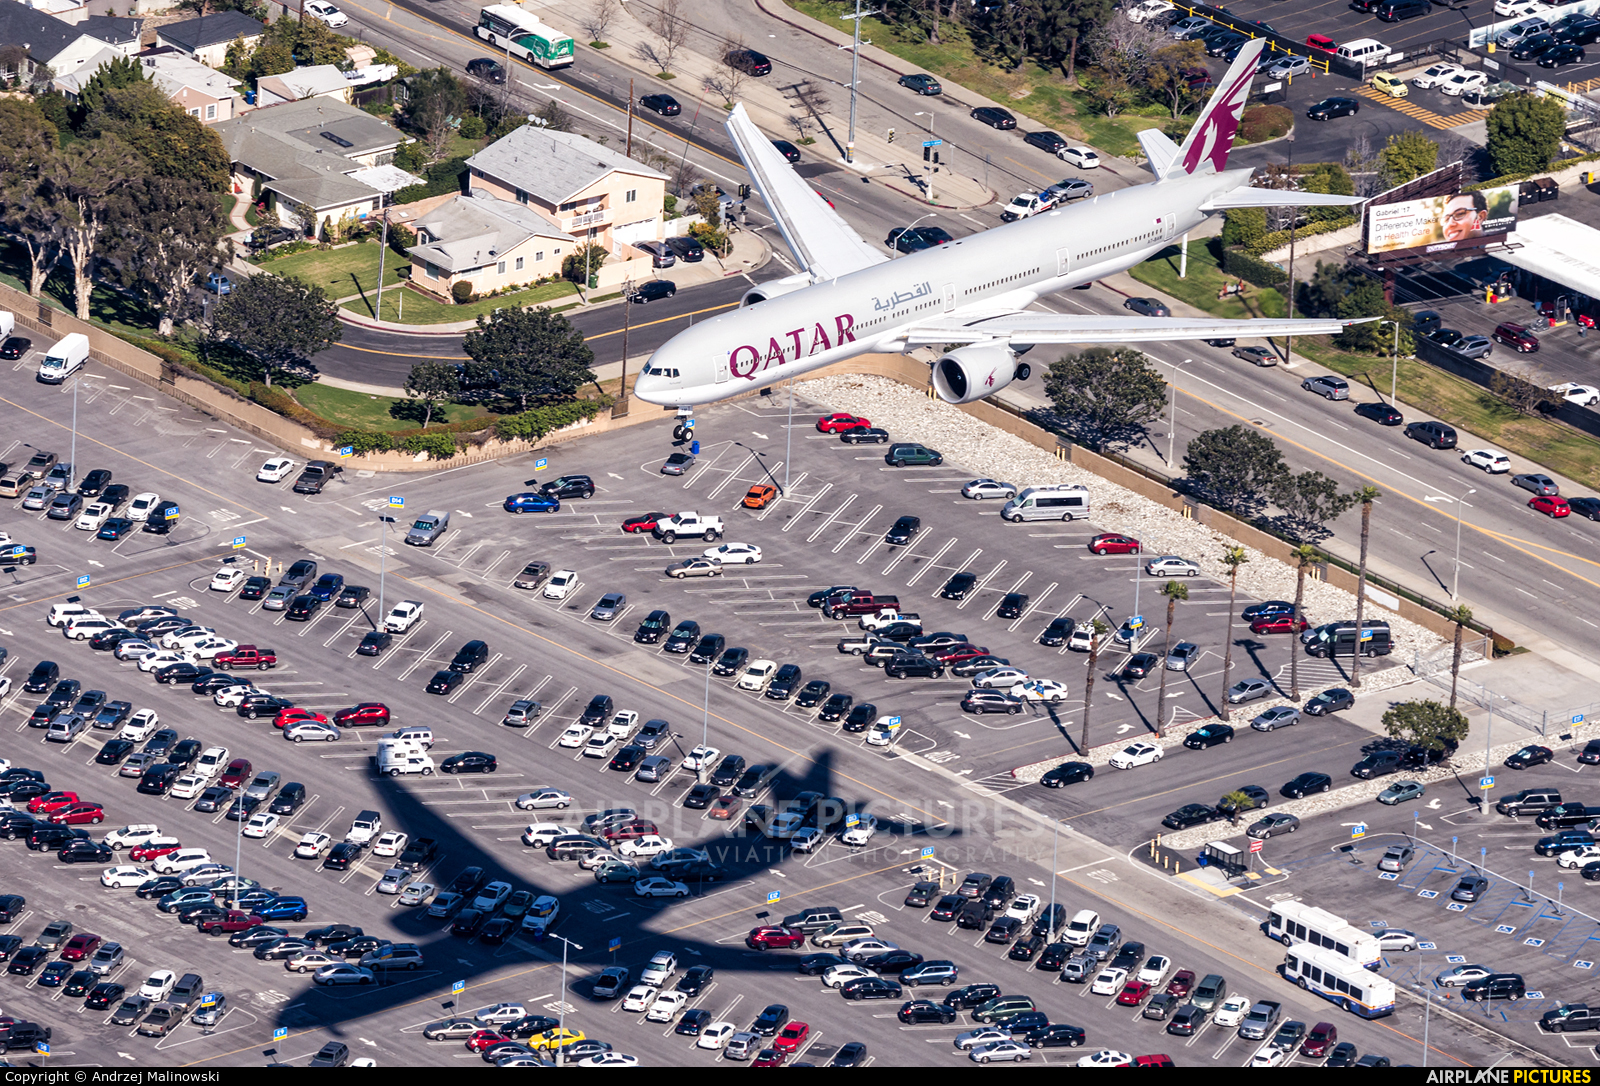 Qatar Airways A7-BAM aircraft at Los Angeles Intl